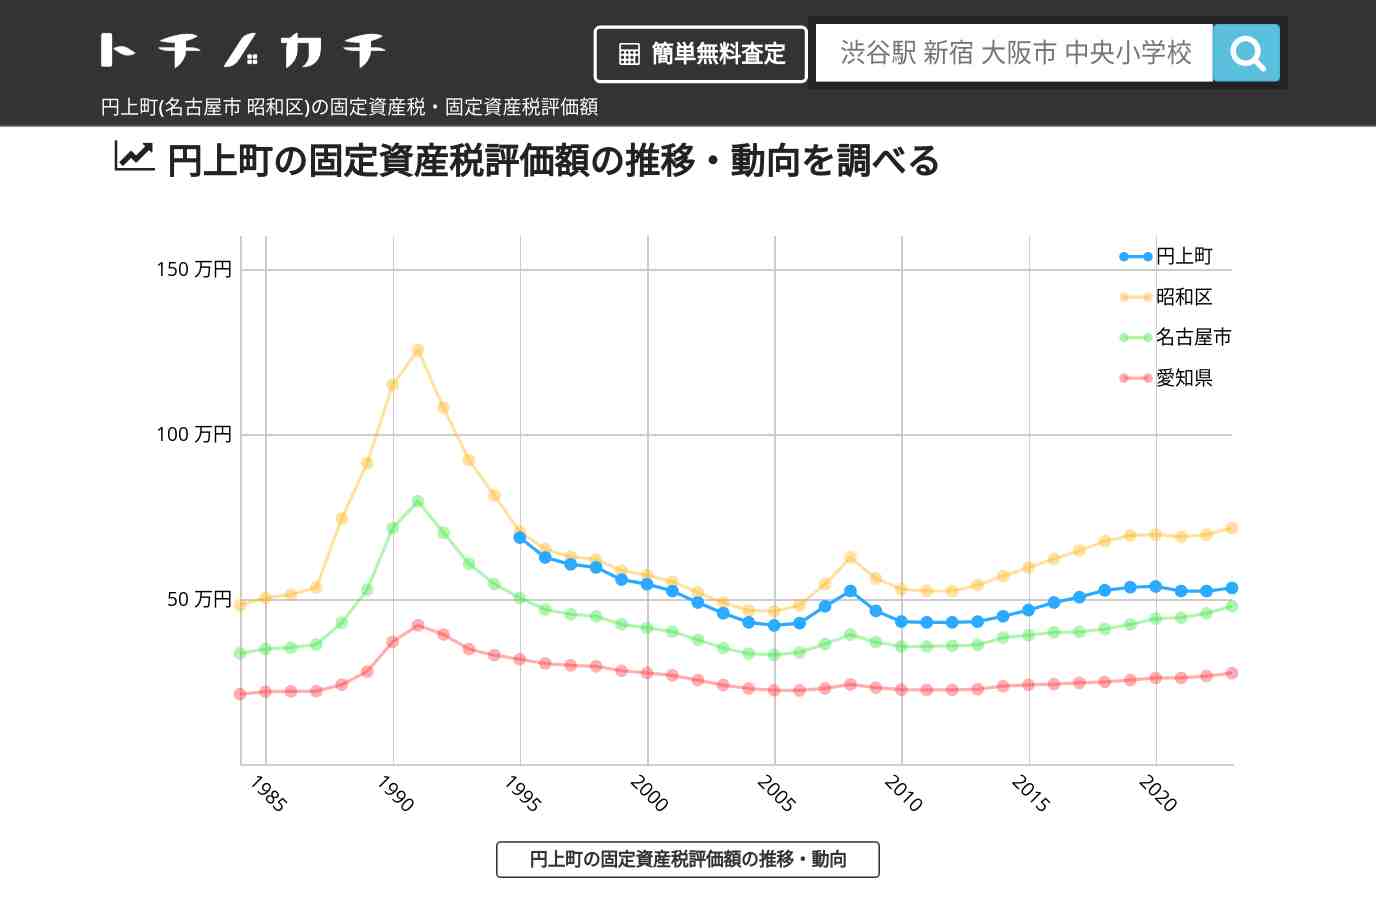 円上町(昭和区)の固定資産税・固定資産税評価額 | トチノカチ